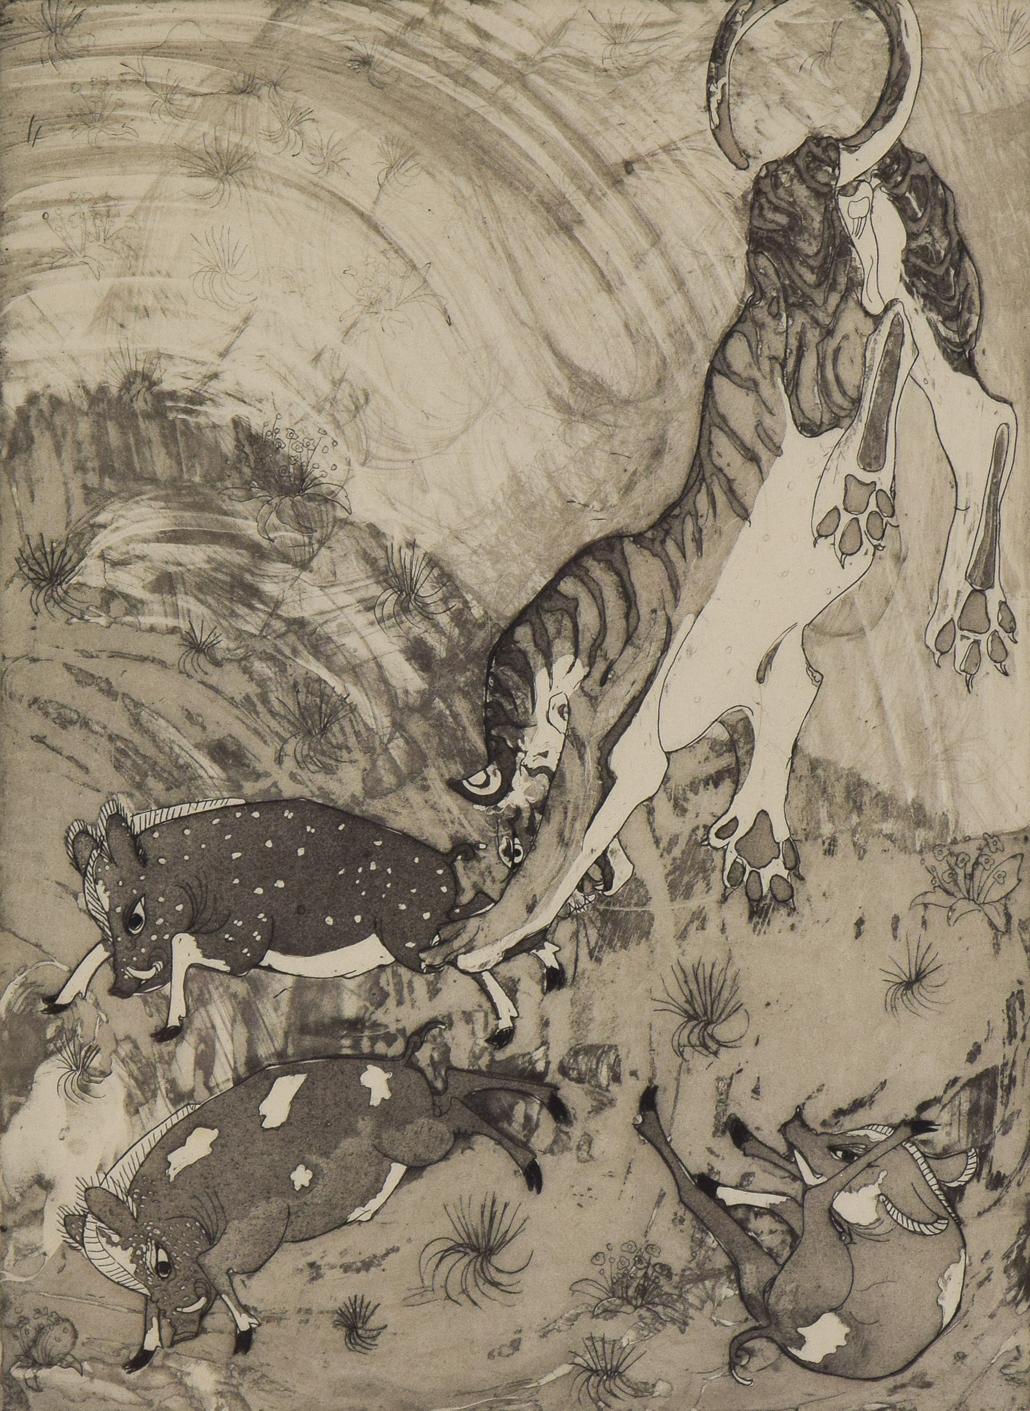 Peccarys and Tiger Pranks by Orovida Pissarro - Animal etching